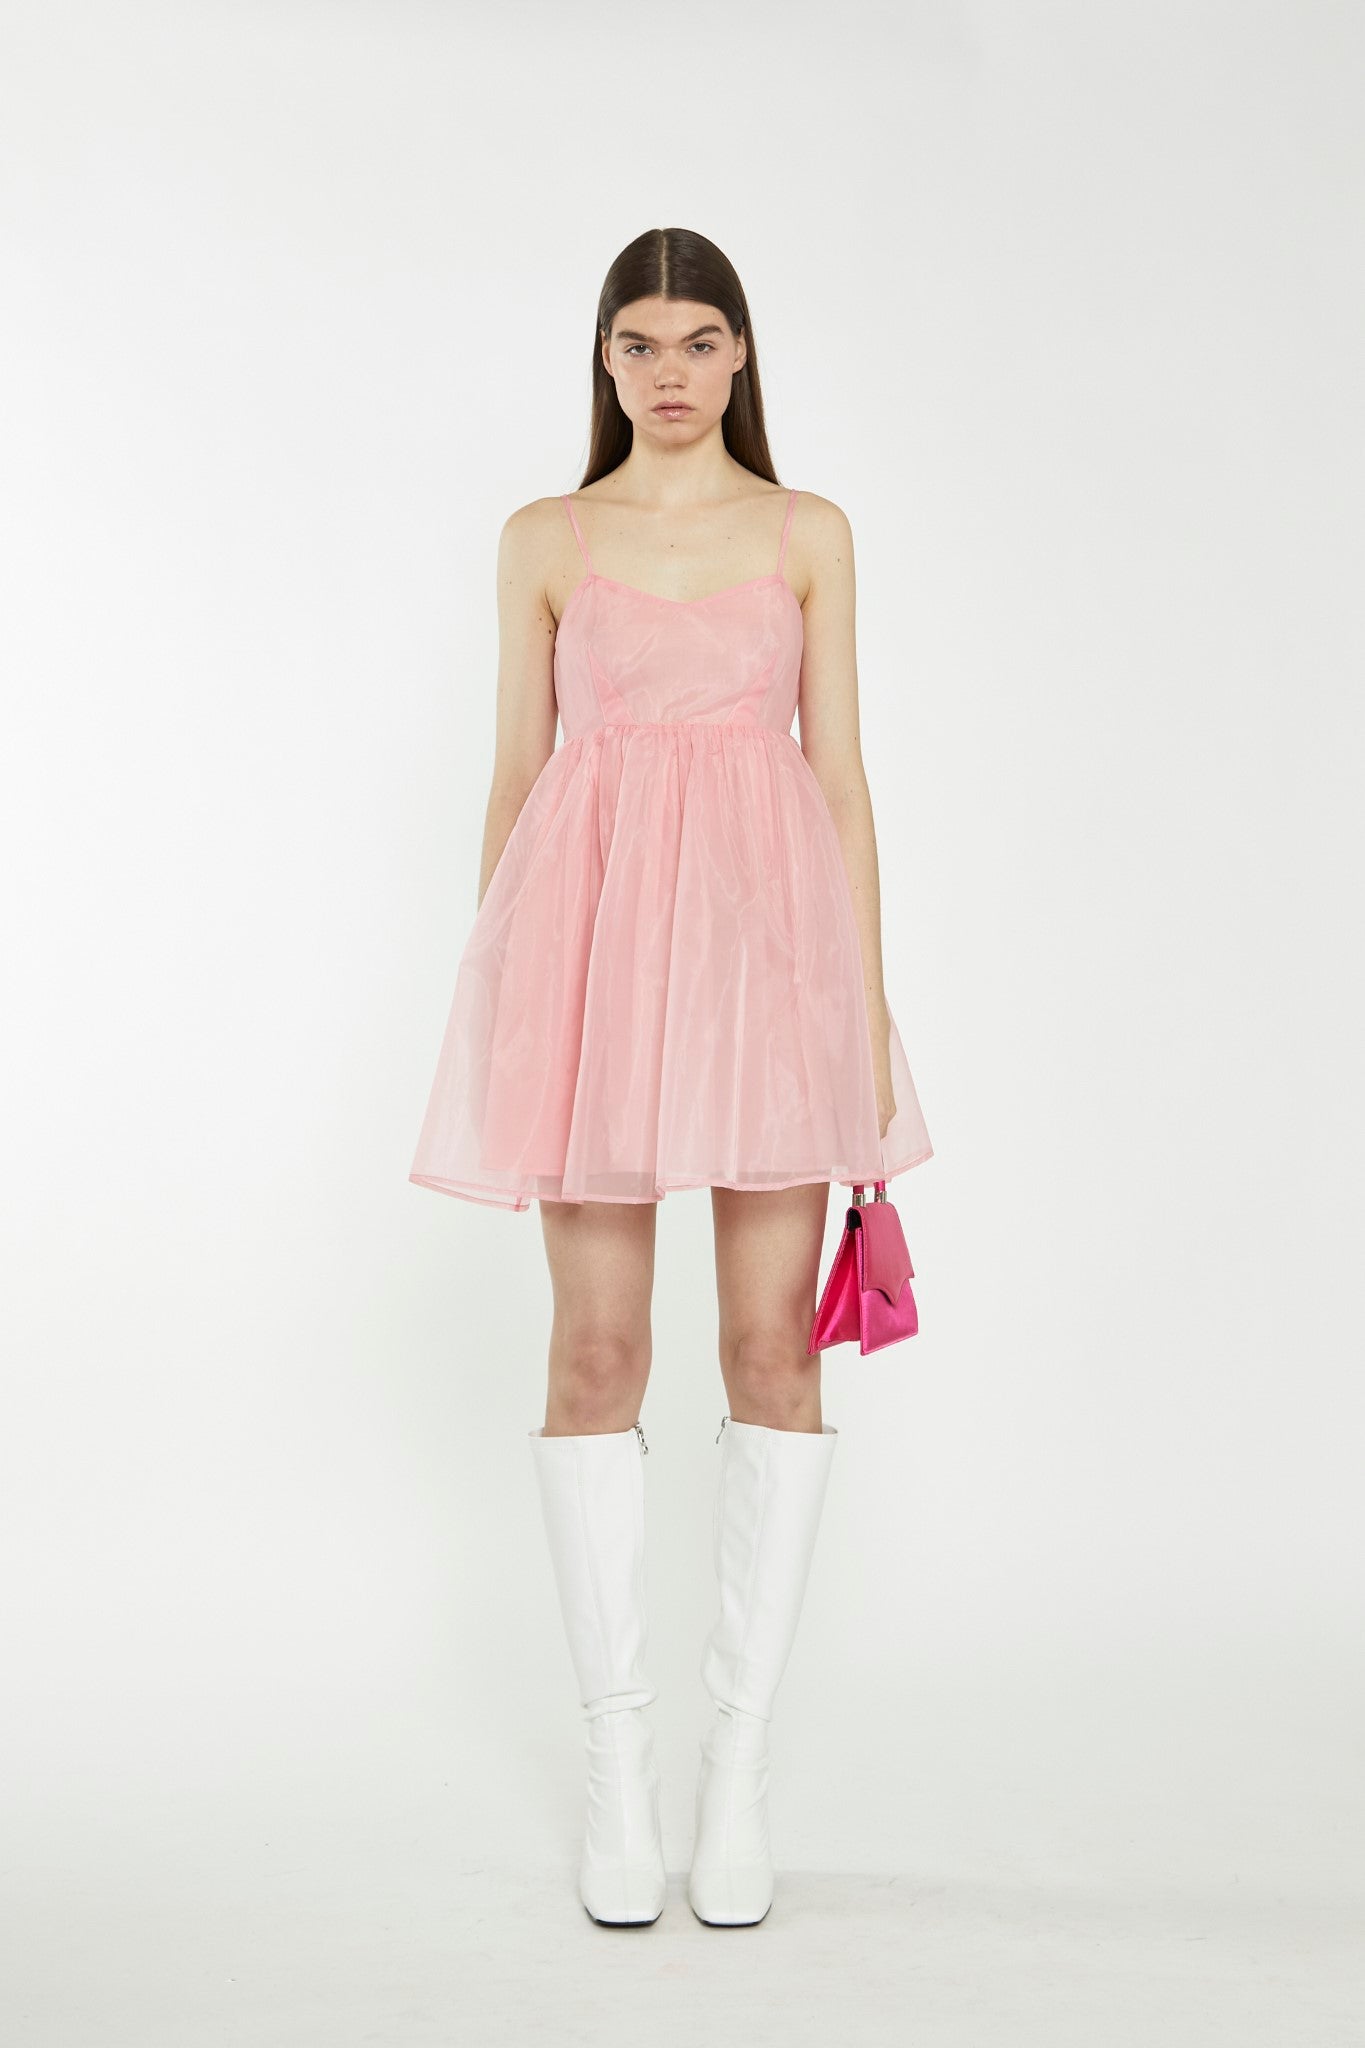 Bubblegum Pink Babydoll Mini Dress - Glamorous